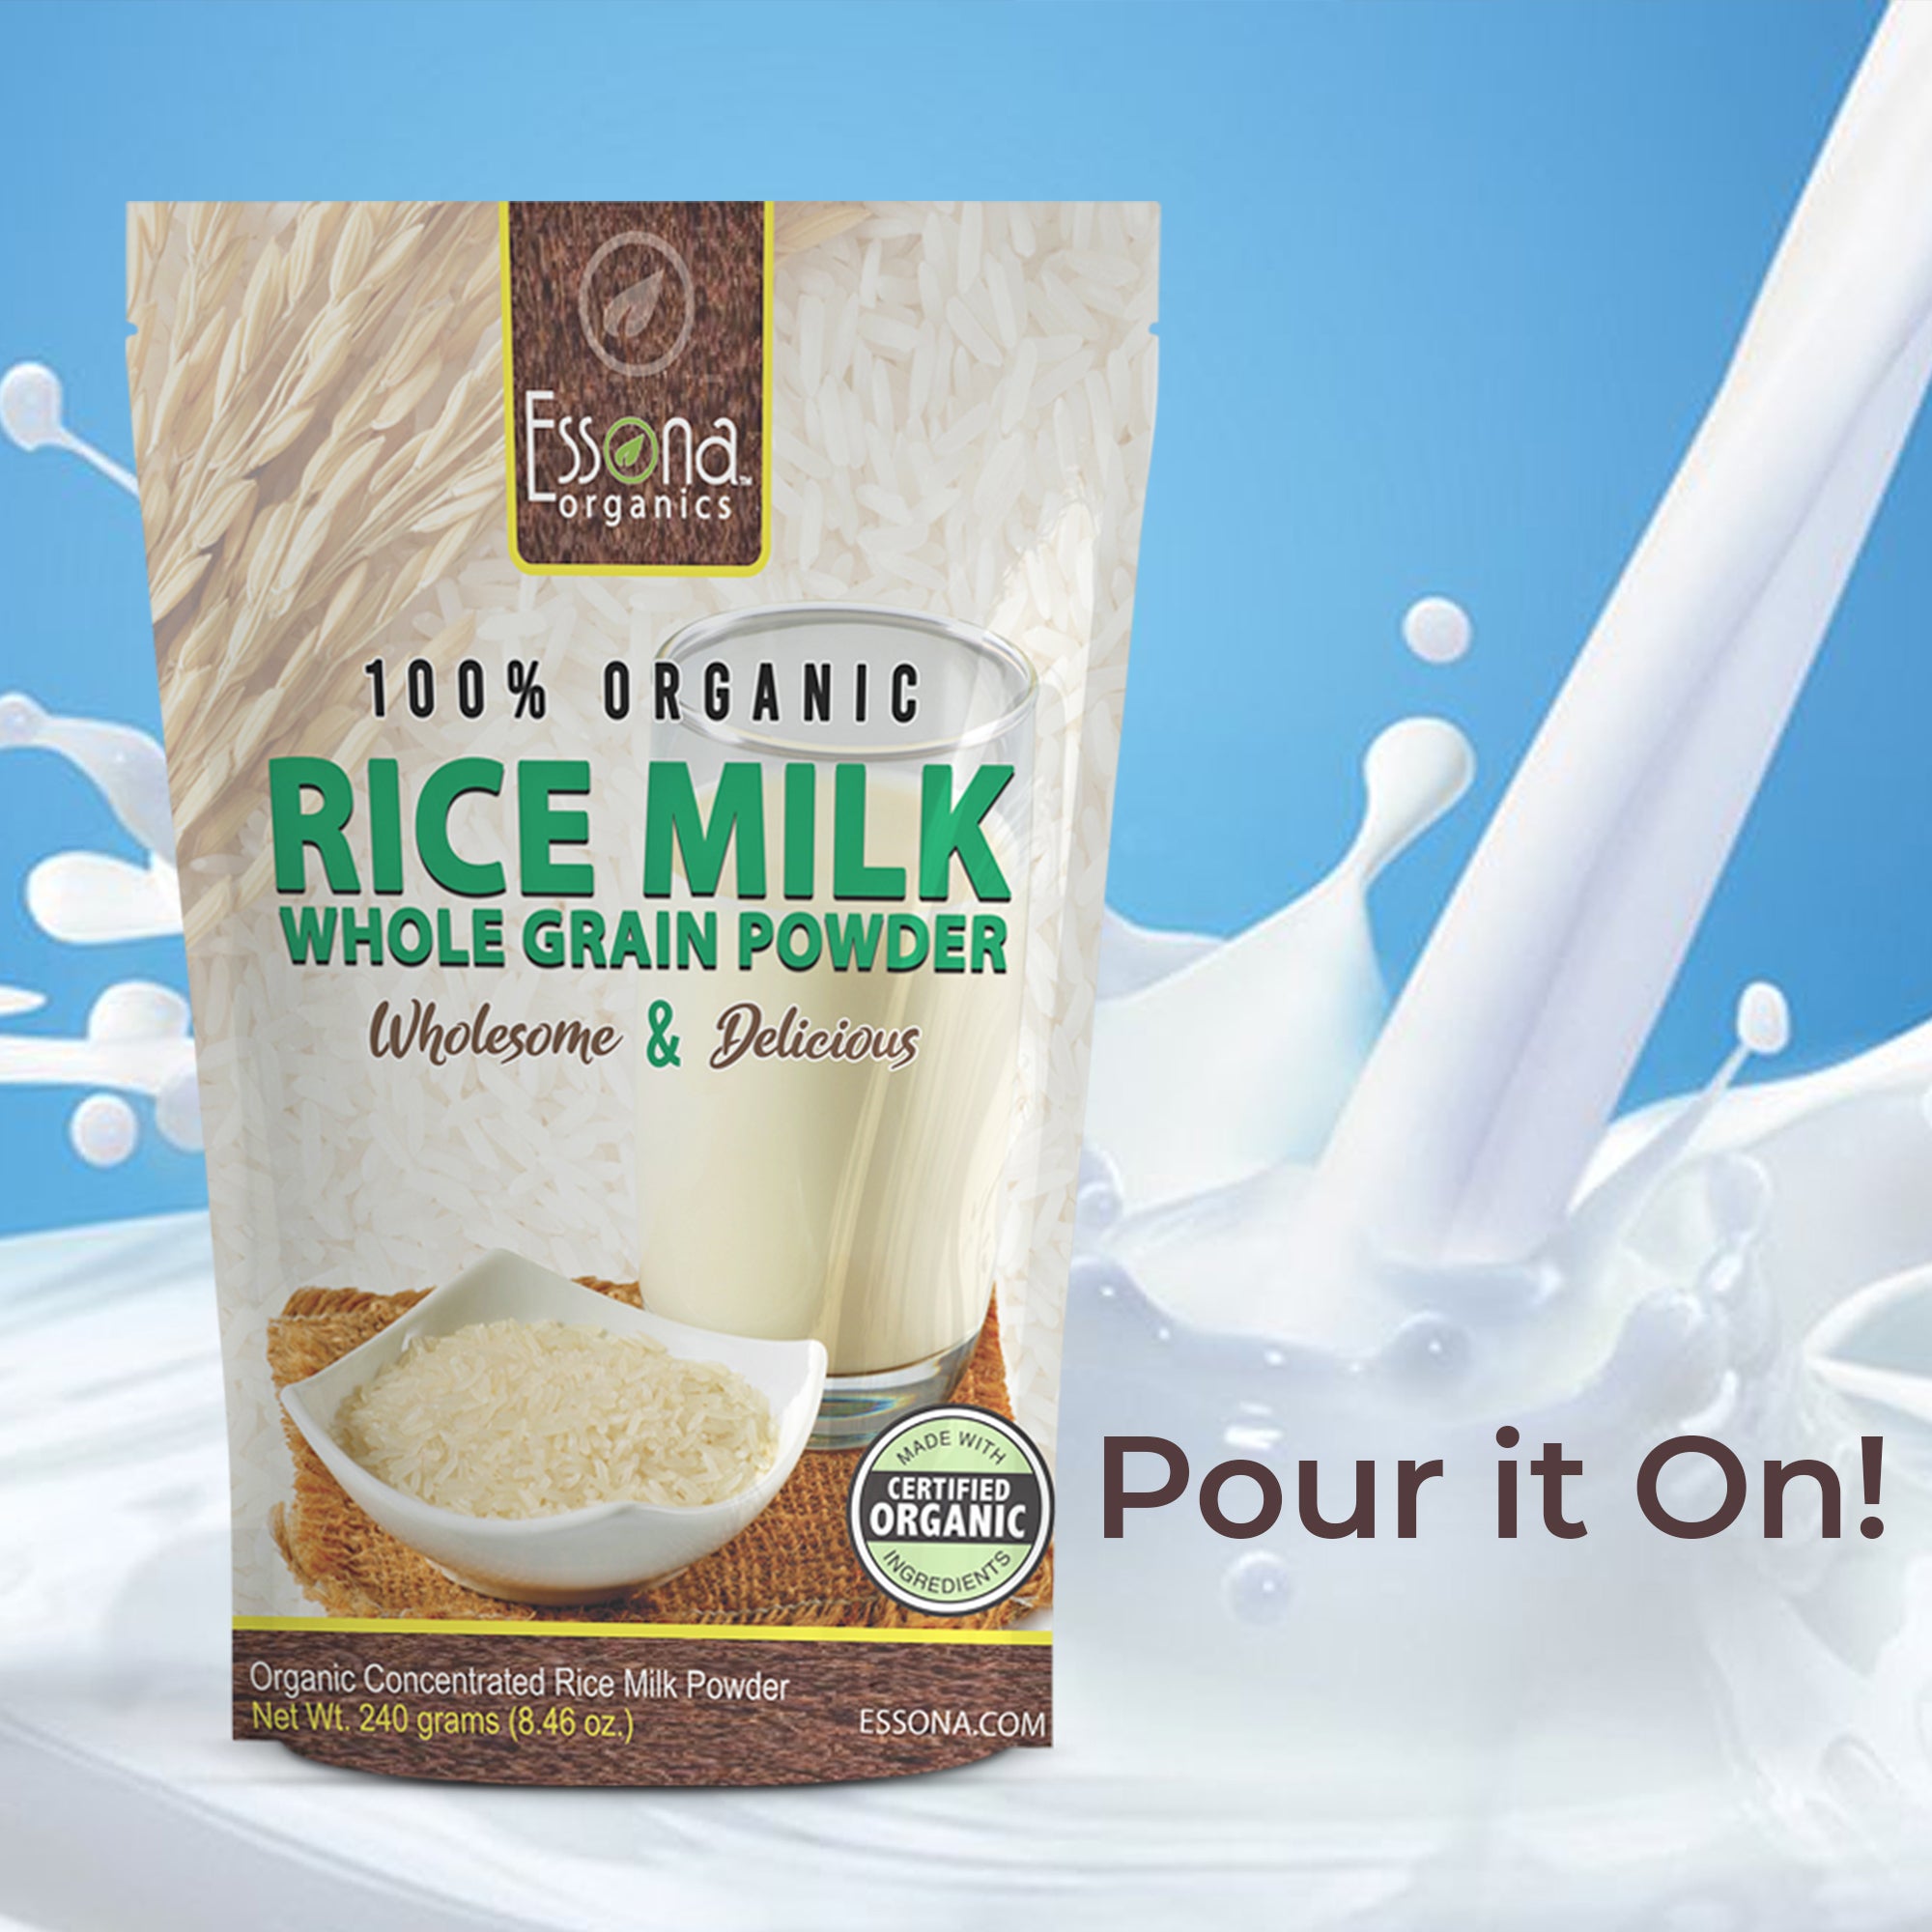 USDA Certified Organic Coconut Milk Powder - Pure, Raw, Vegan. Re-seal Pouch.